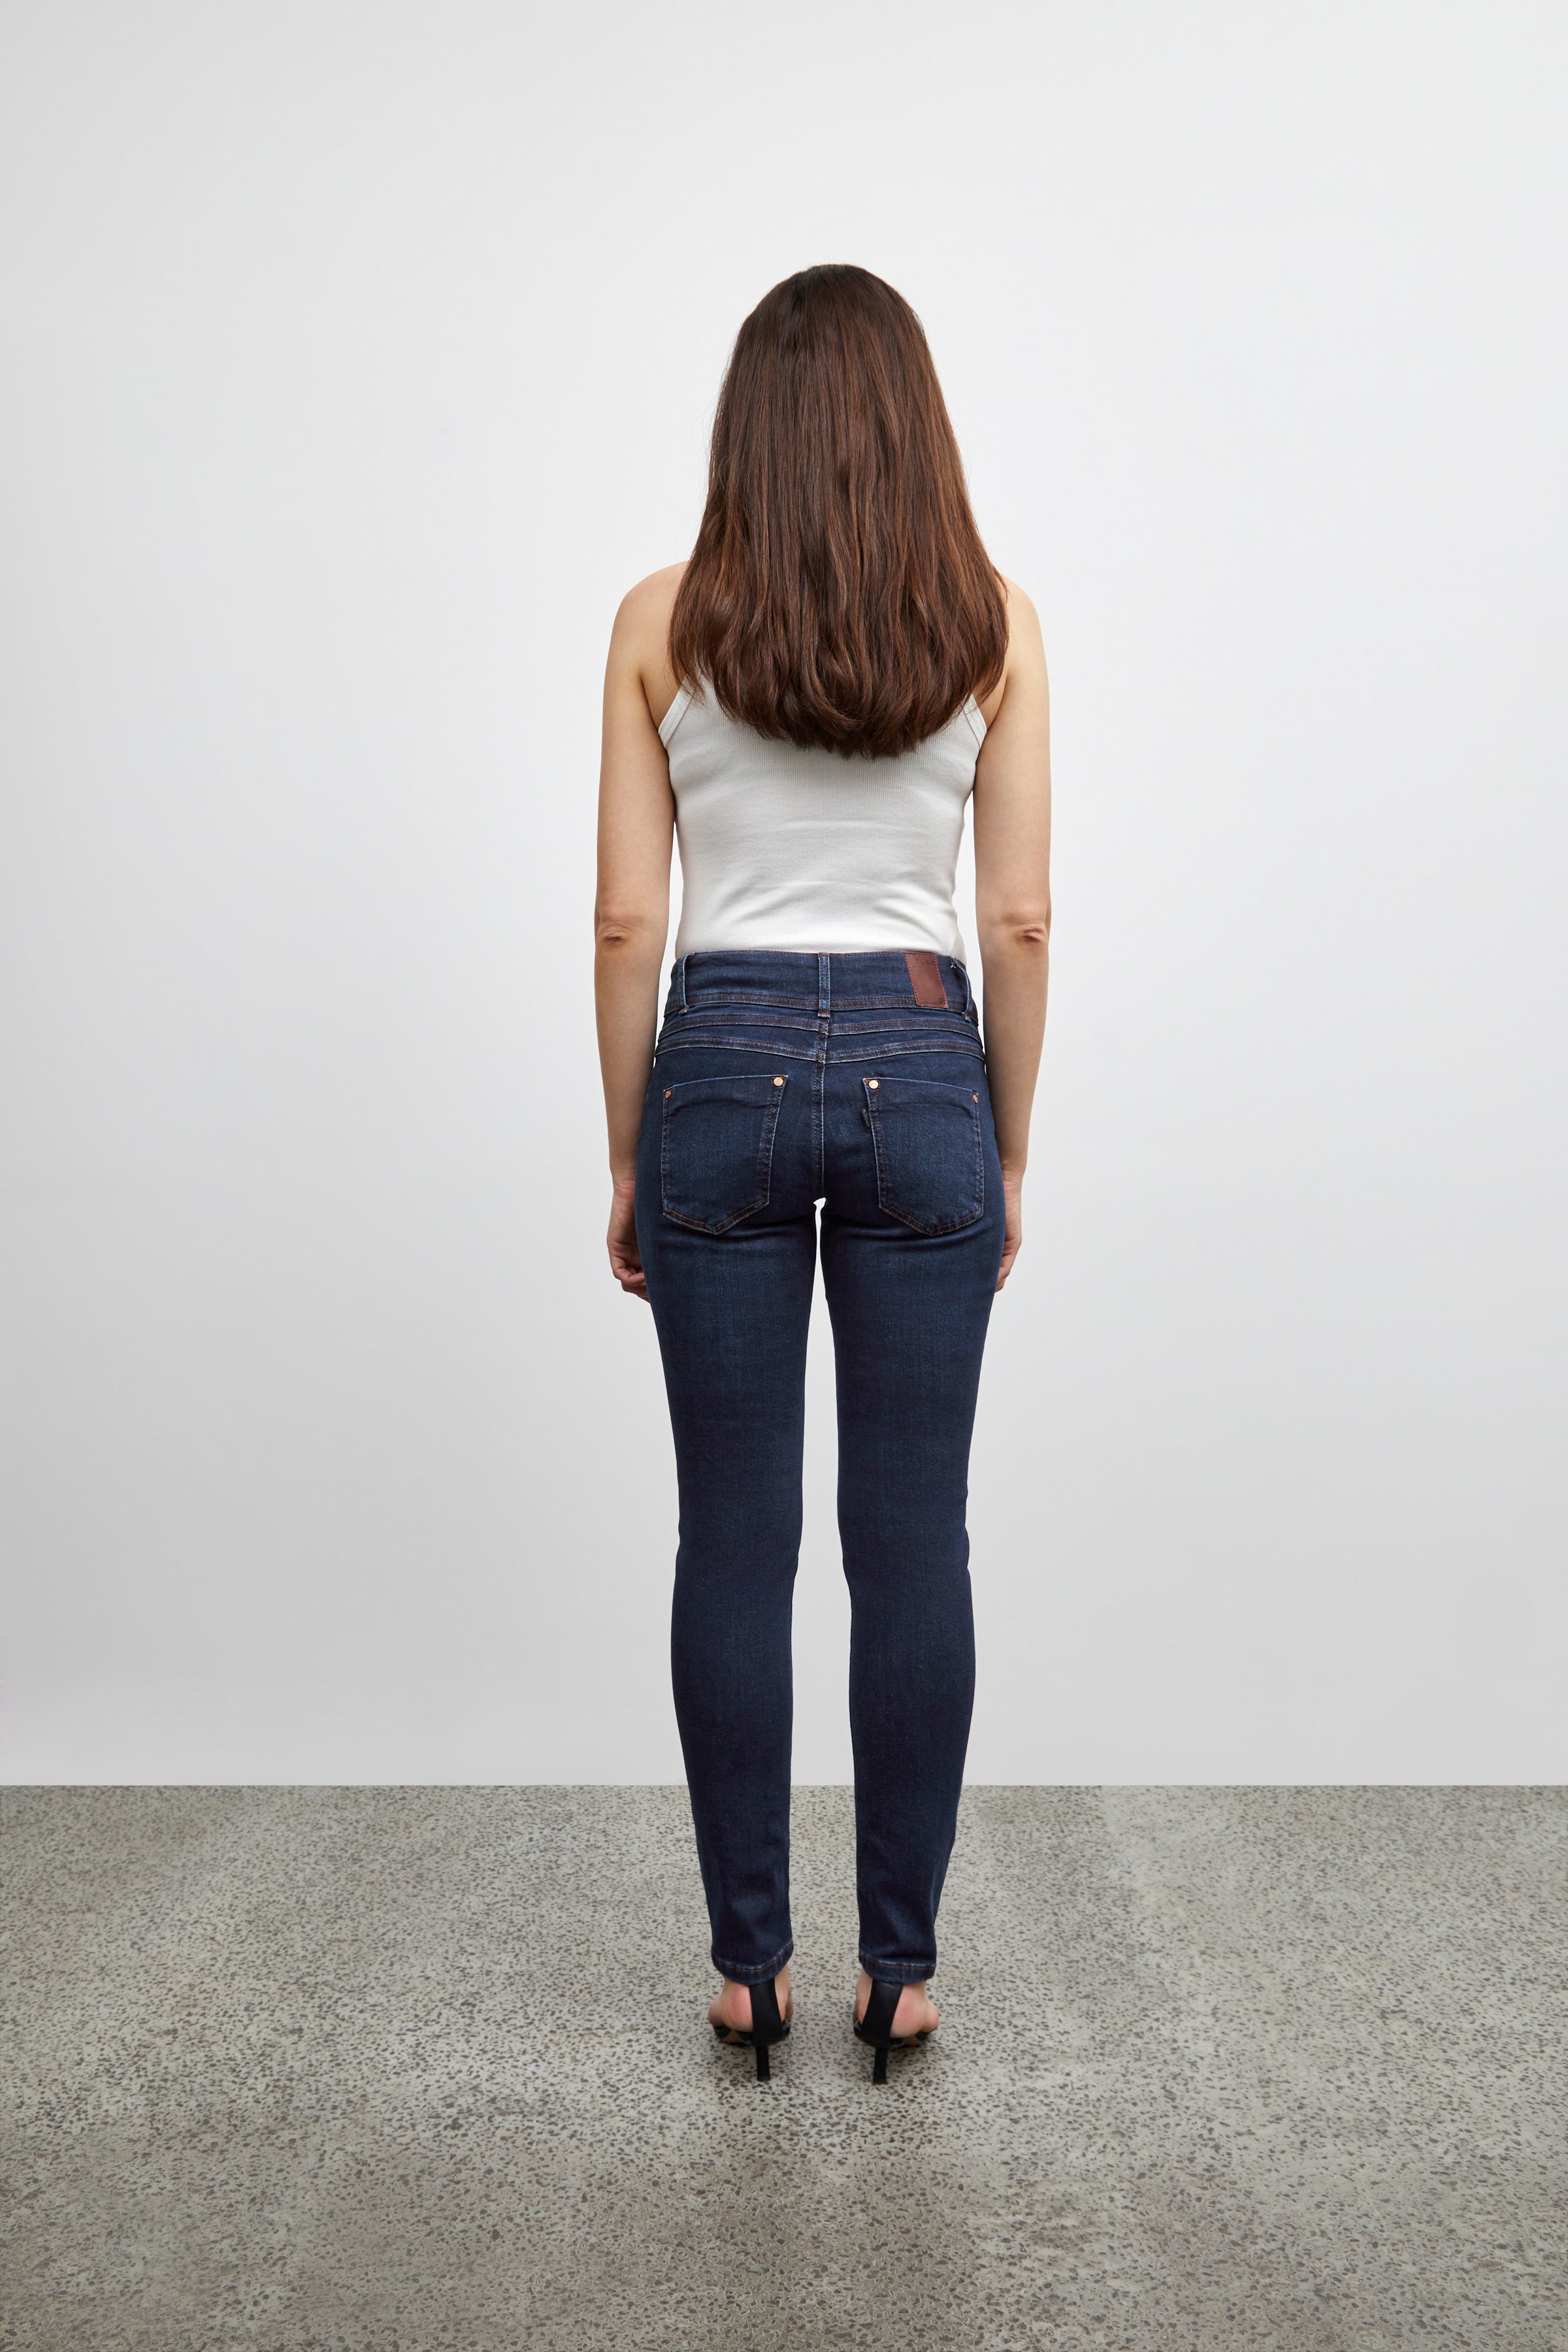 Pulz Suzy Jeans Curve Skinny Leg - Dark Blue